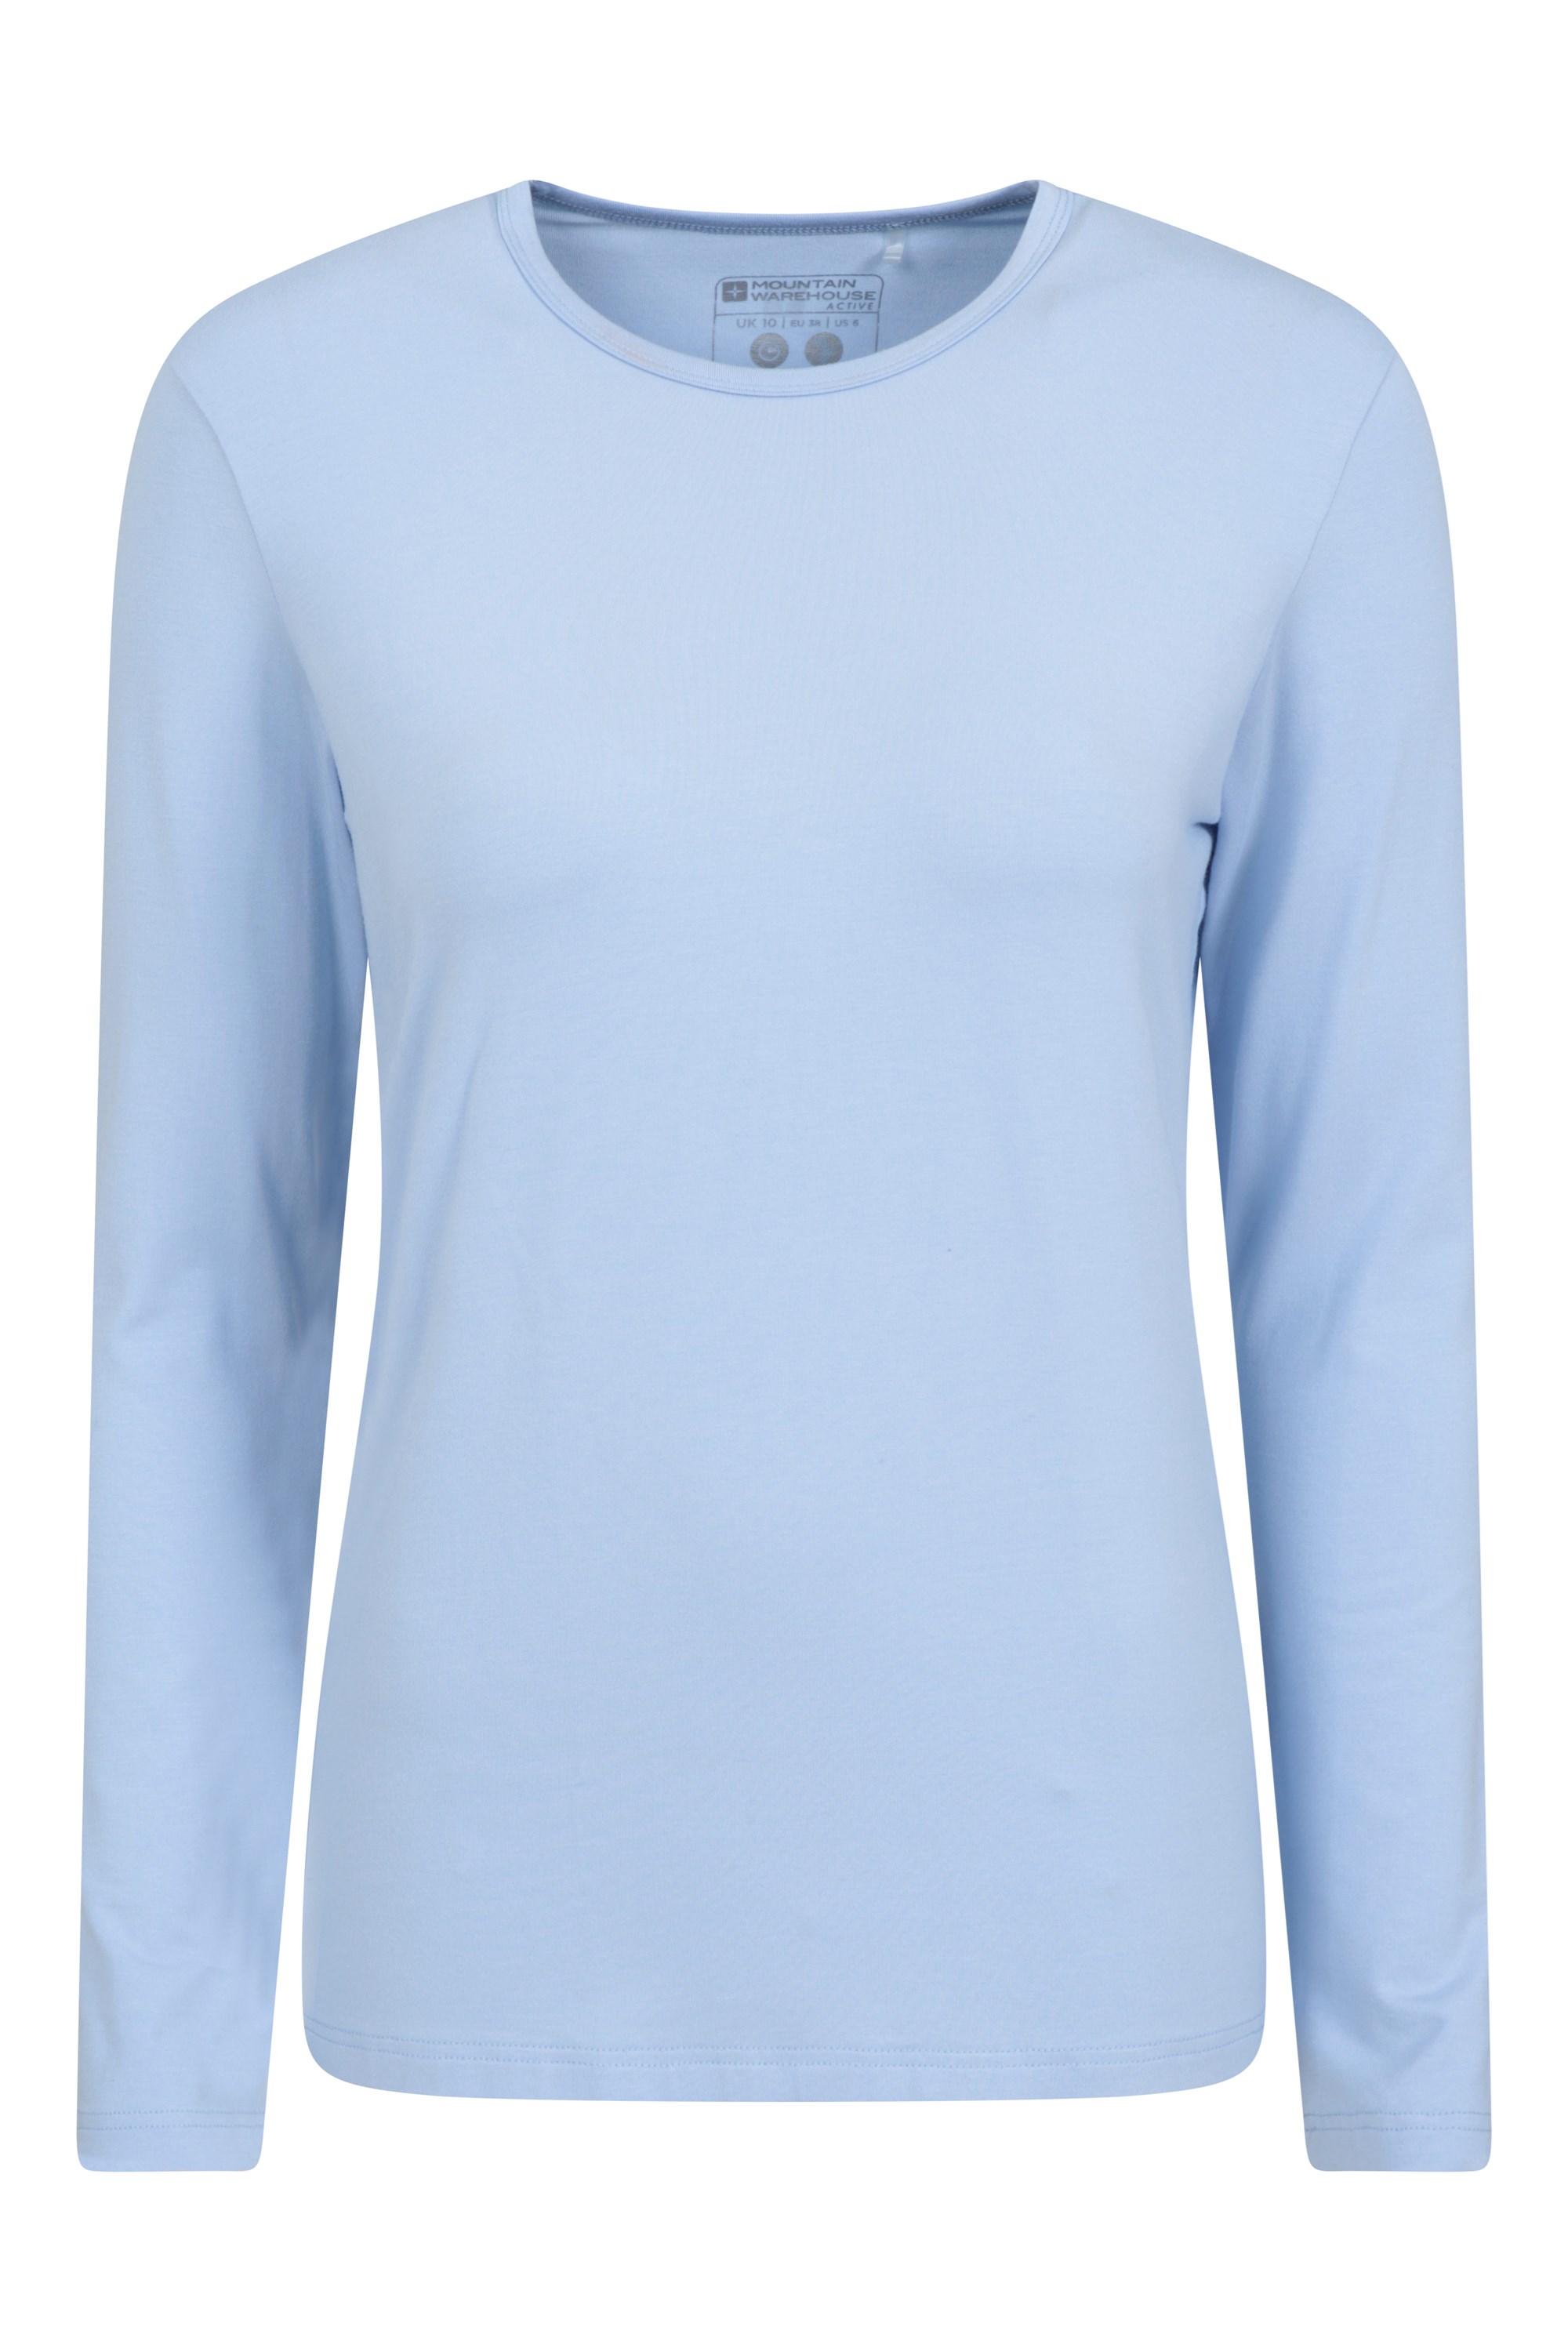 Mountain Warehouse Wms Enlighten Printed Womens Long Sleeved Tee Tshirt